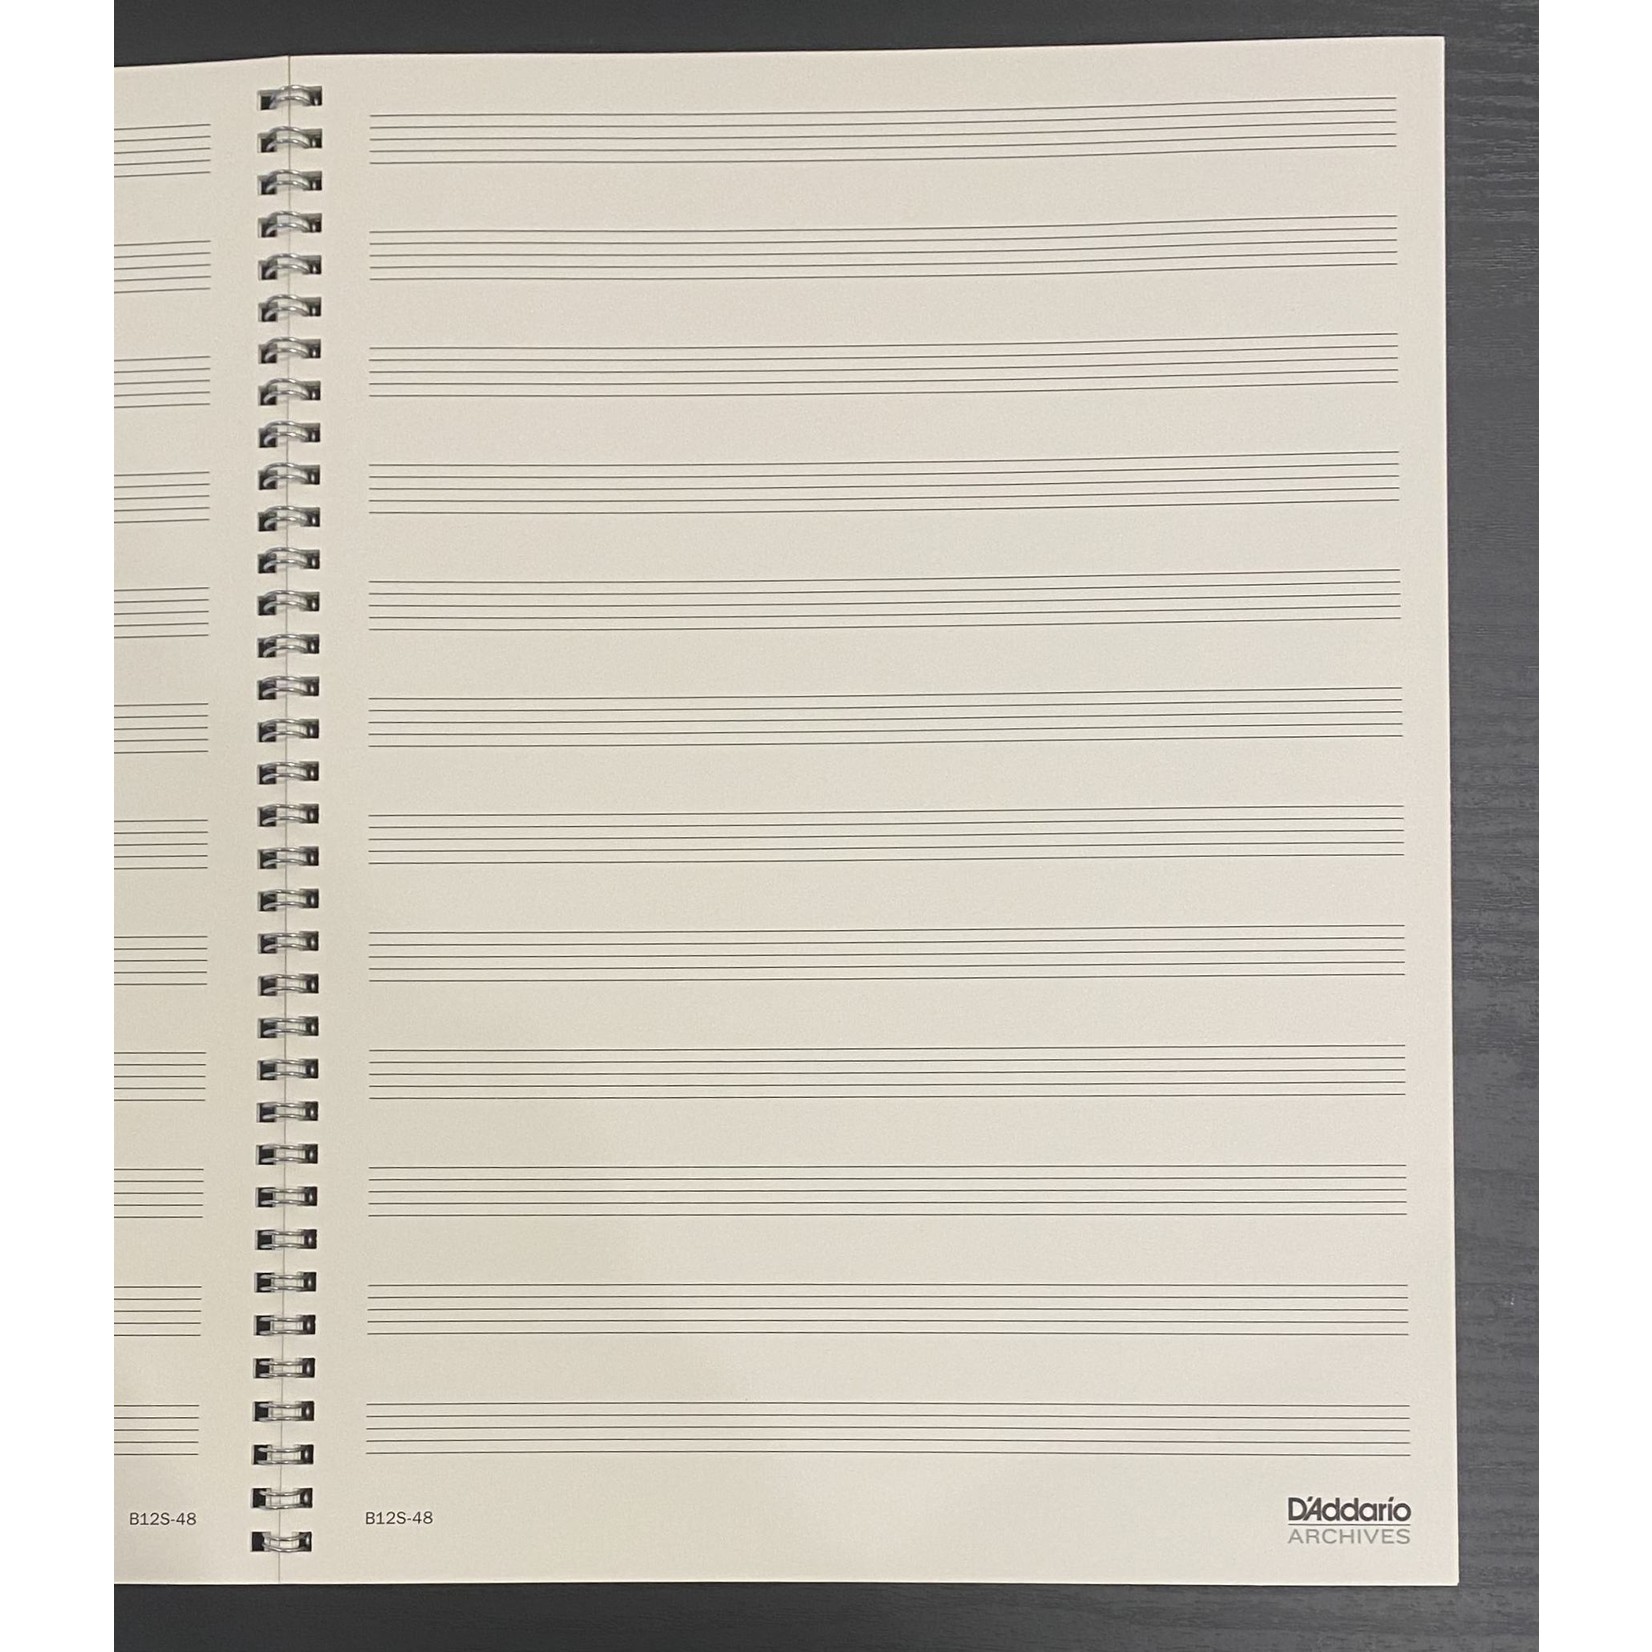 Manuscript: Archives, Spiral Notebook, 12st/48pg (9"x12")